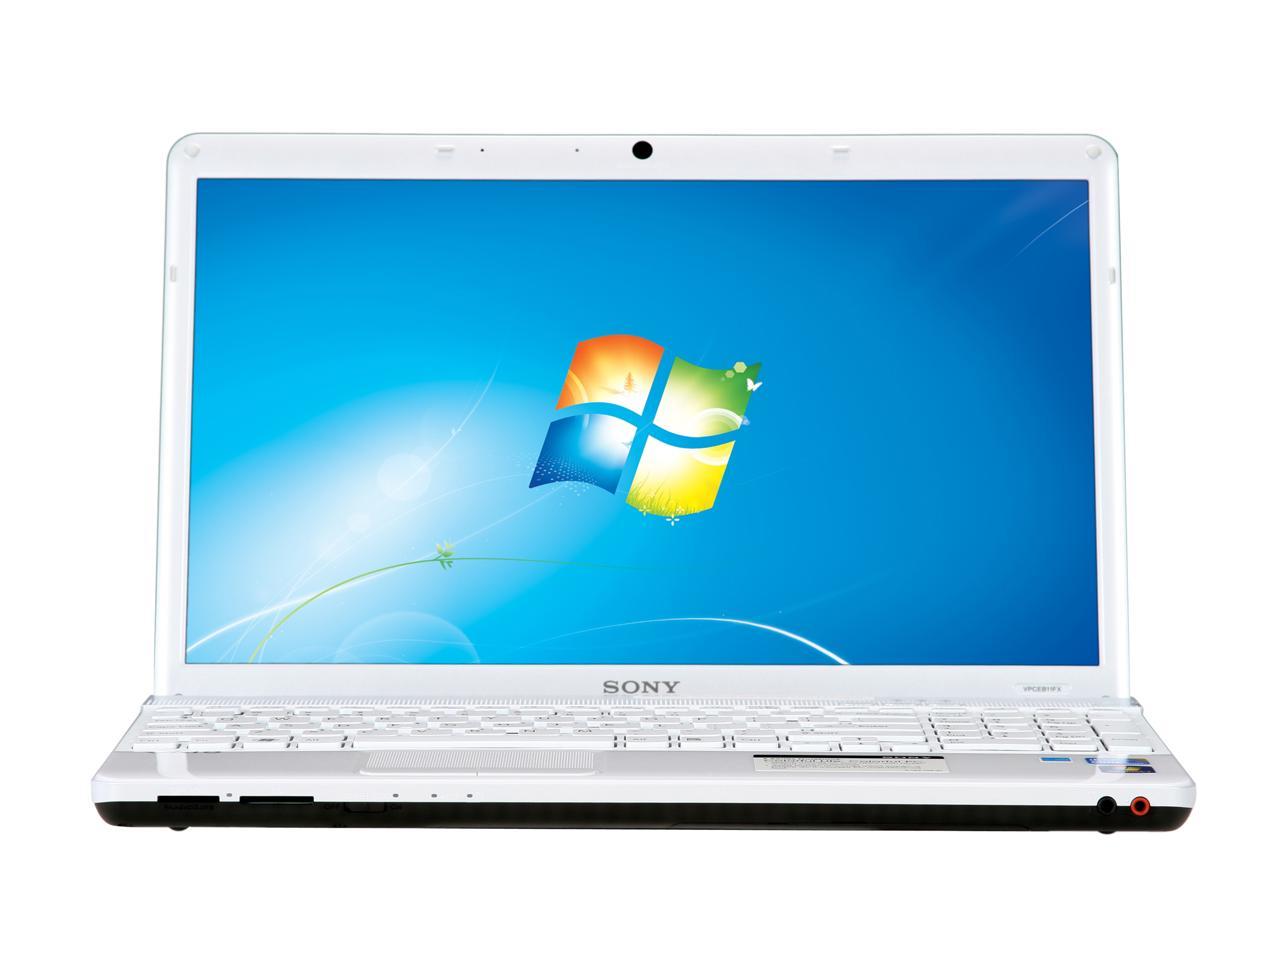 SONY Laptop VAIO E Series Intel Core i3 1st Gen 330M (2.13GHz) 4GB